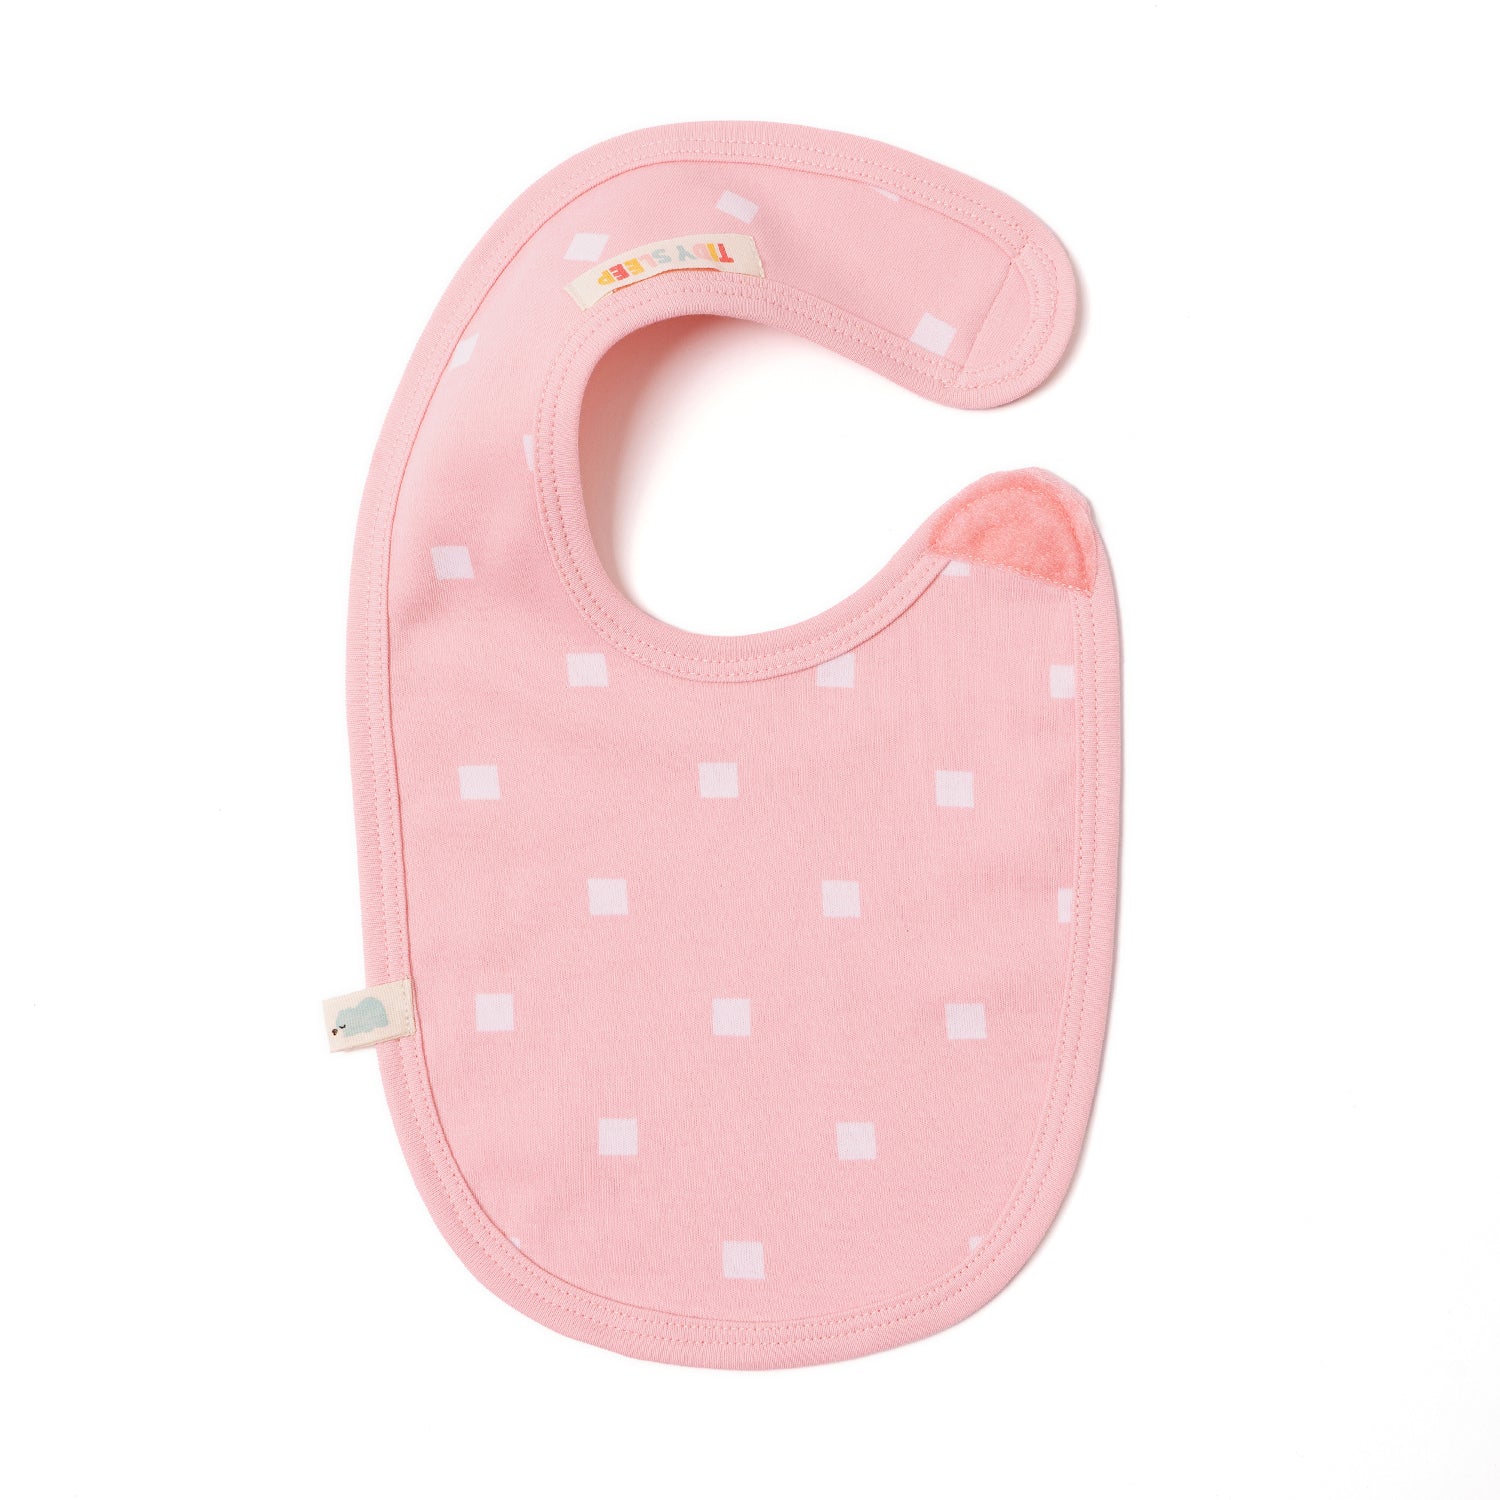 Cotton Jersey BIB for Baby - Pink Polka